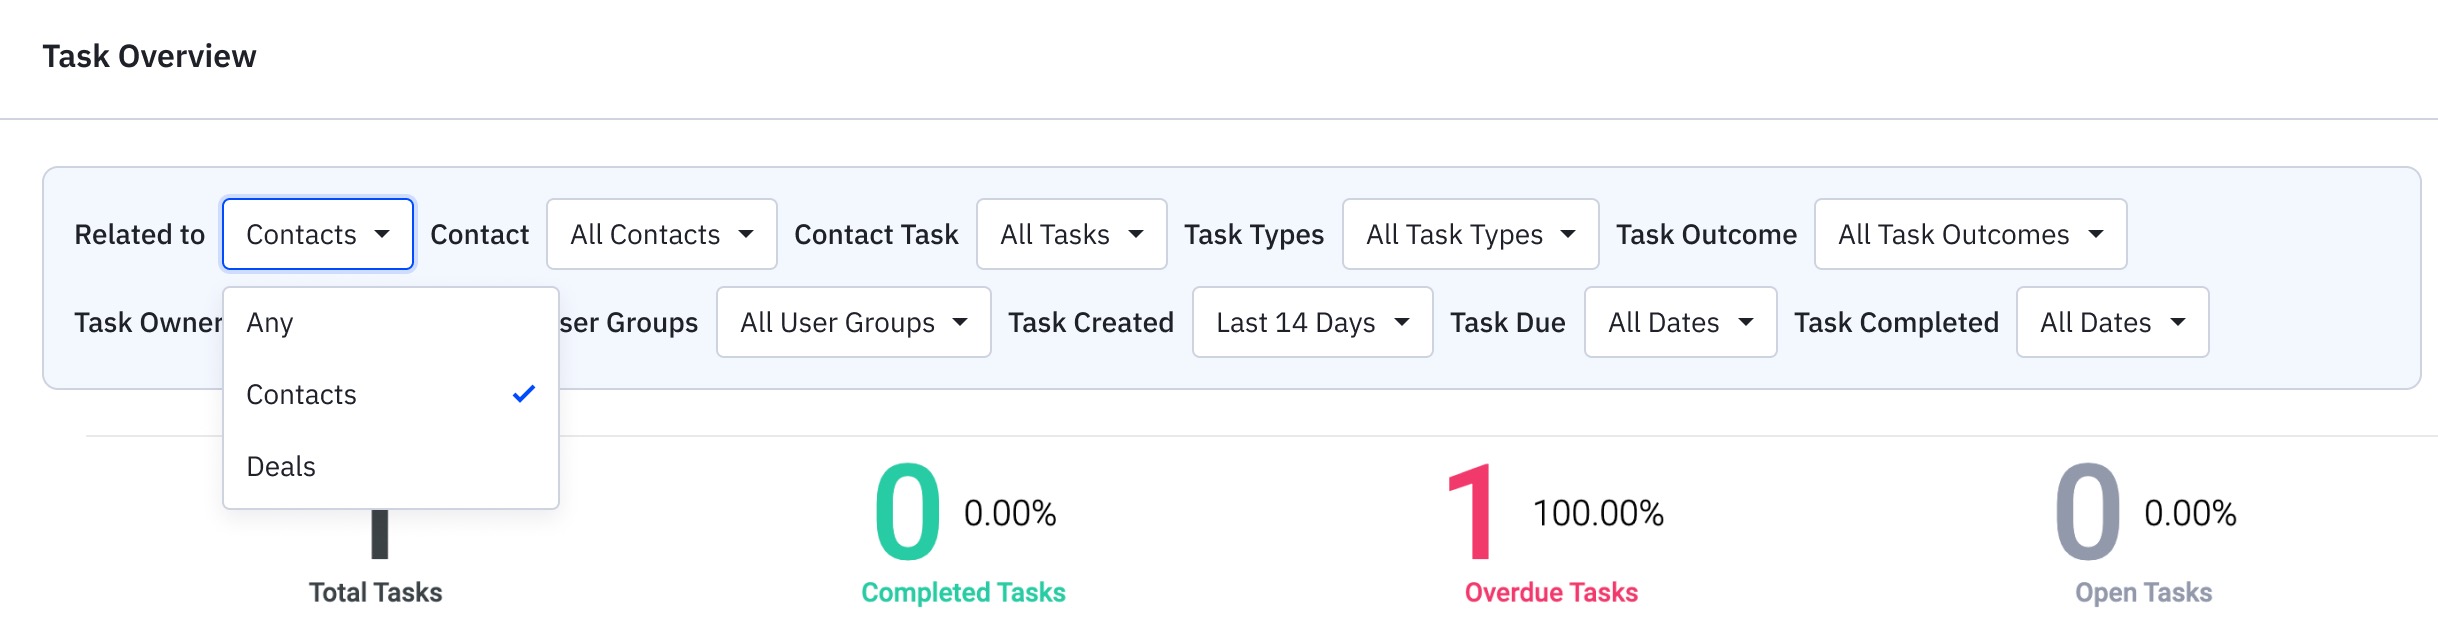 Task_Outcome_report.jpg